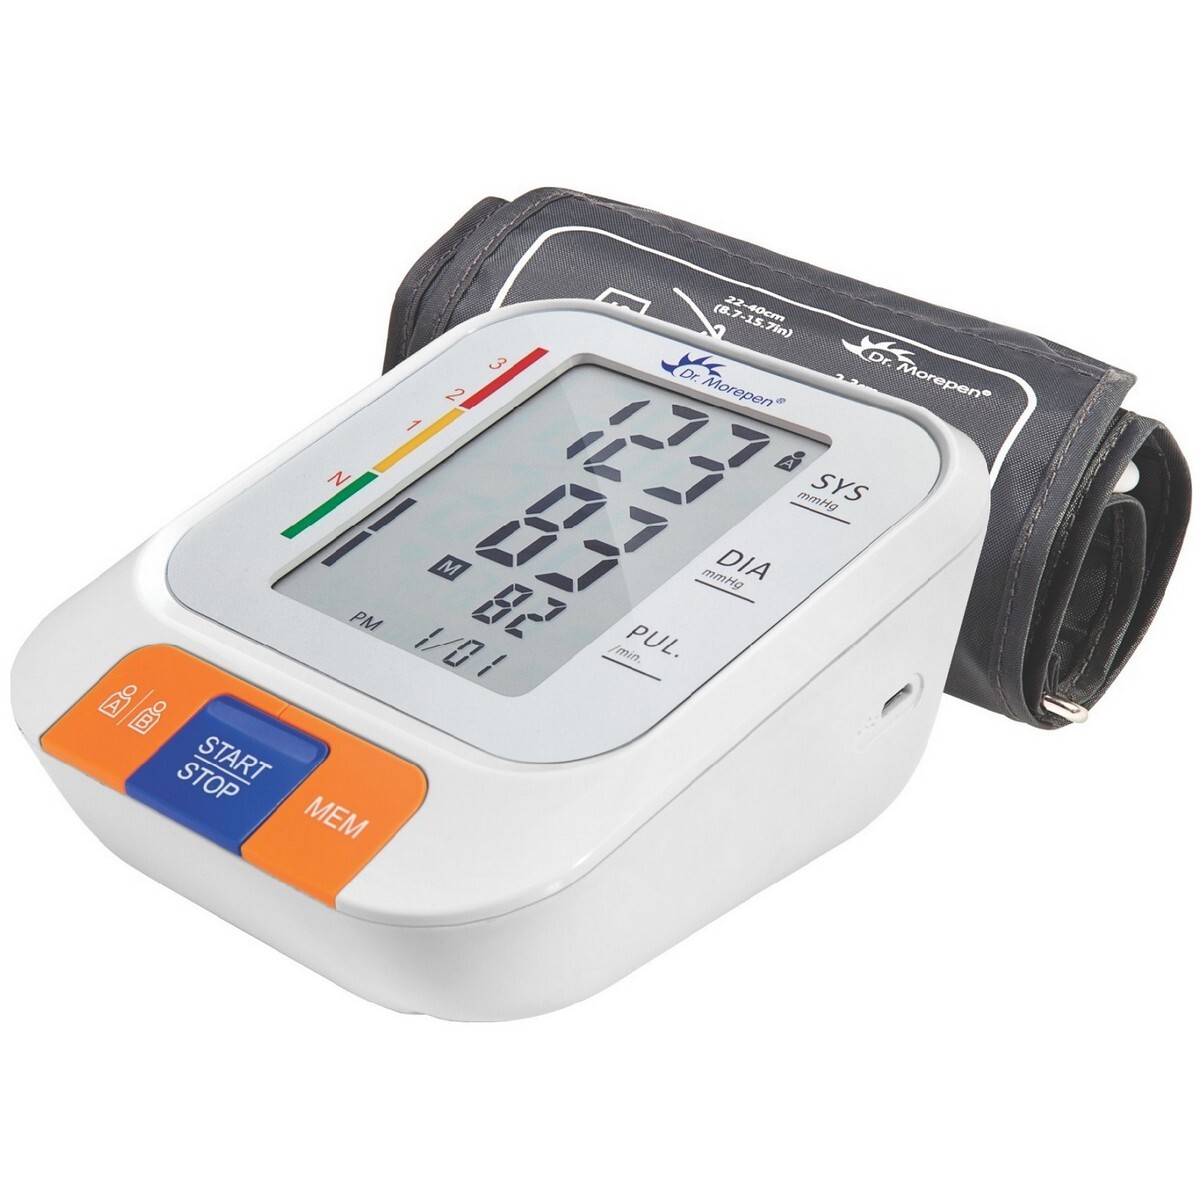 DR Morepen Blood Pressure Monitor BP15